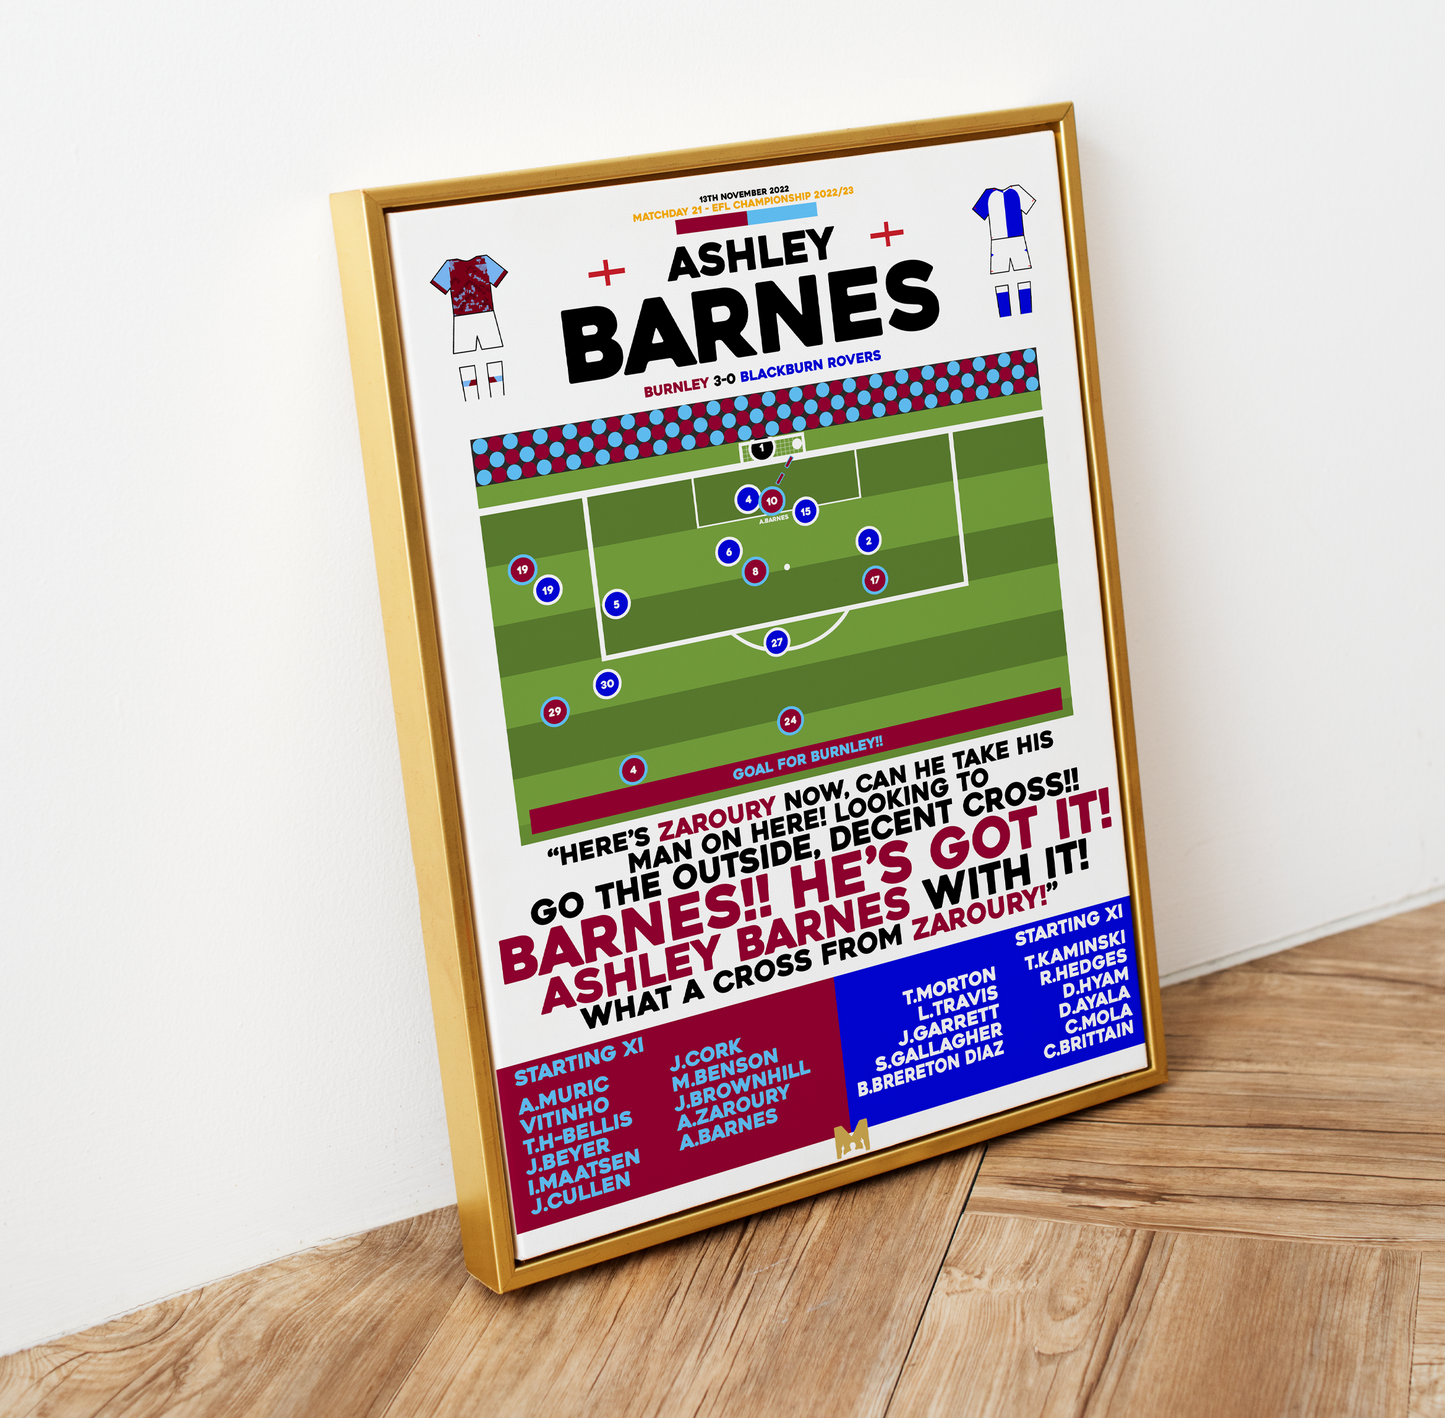 Ashley Barnes 1st Goal vs Blackburn Rovers - EFL Championship 2022/23 - Burnley